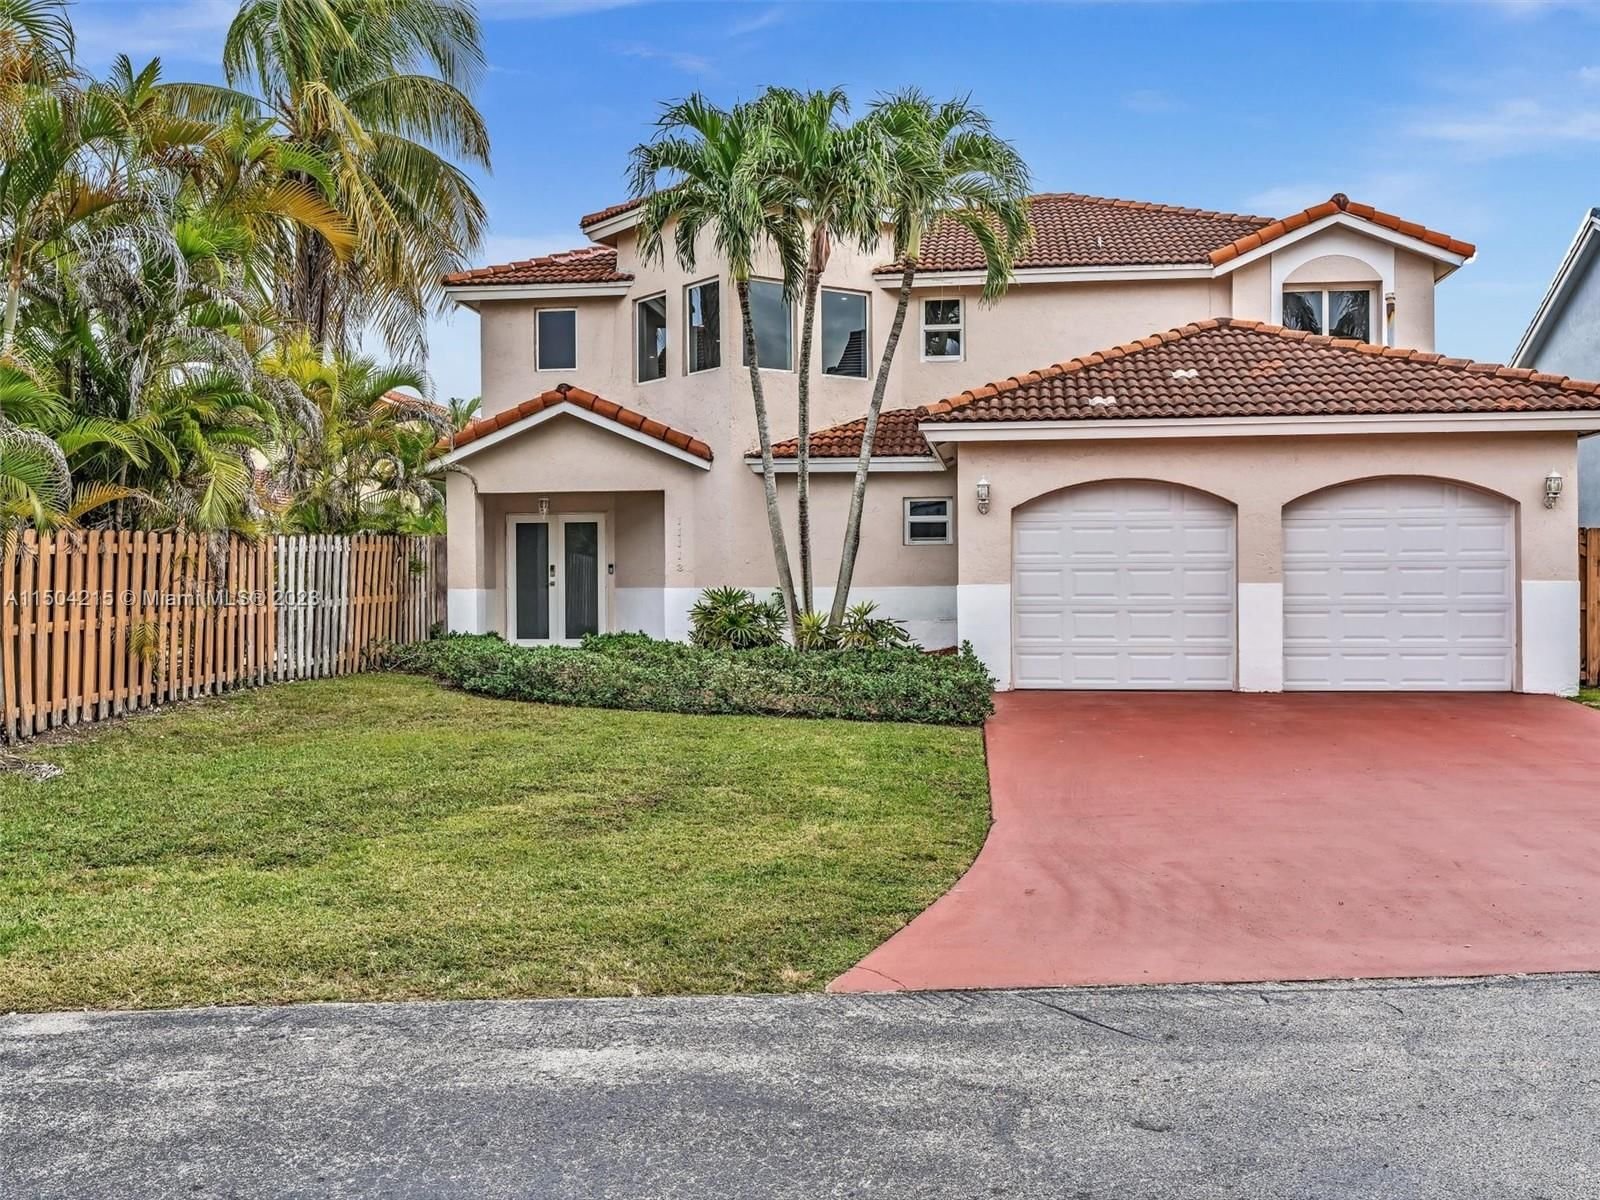 Real estate property located at 11113 156th Ct, Miami-Dade County, ATRIUM HOMES AT THE HAMMO, Miami, FL